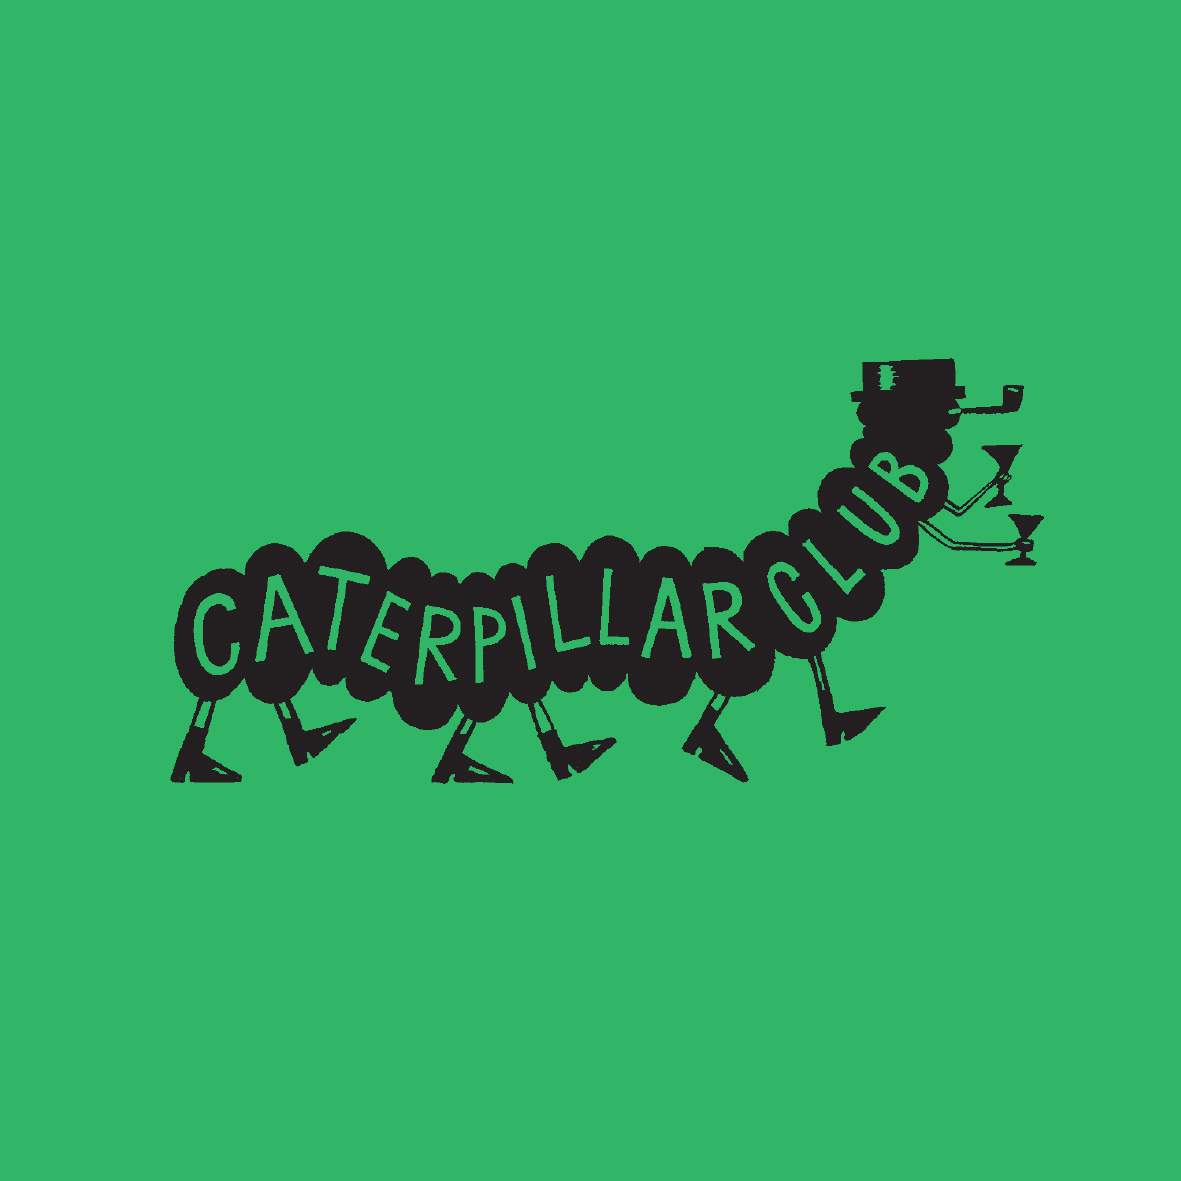 The Caterpillar Club logo